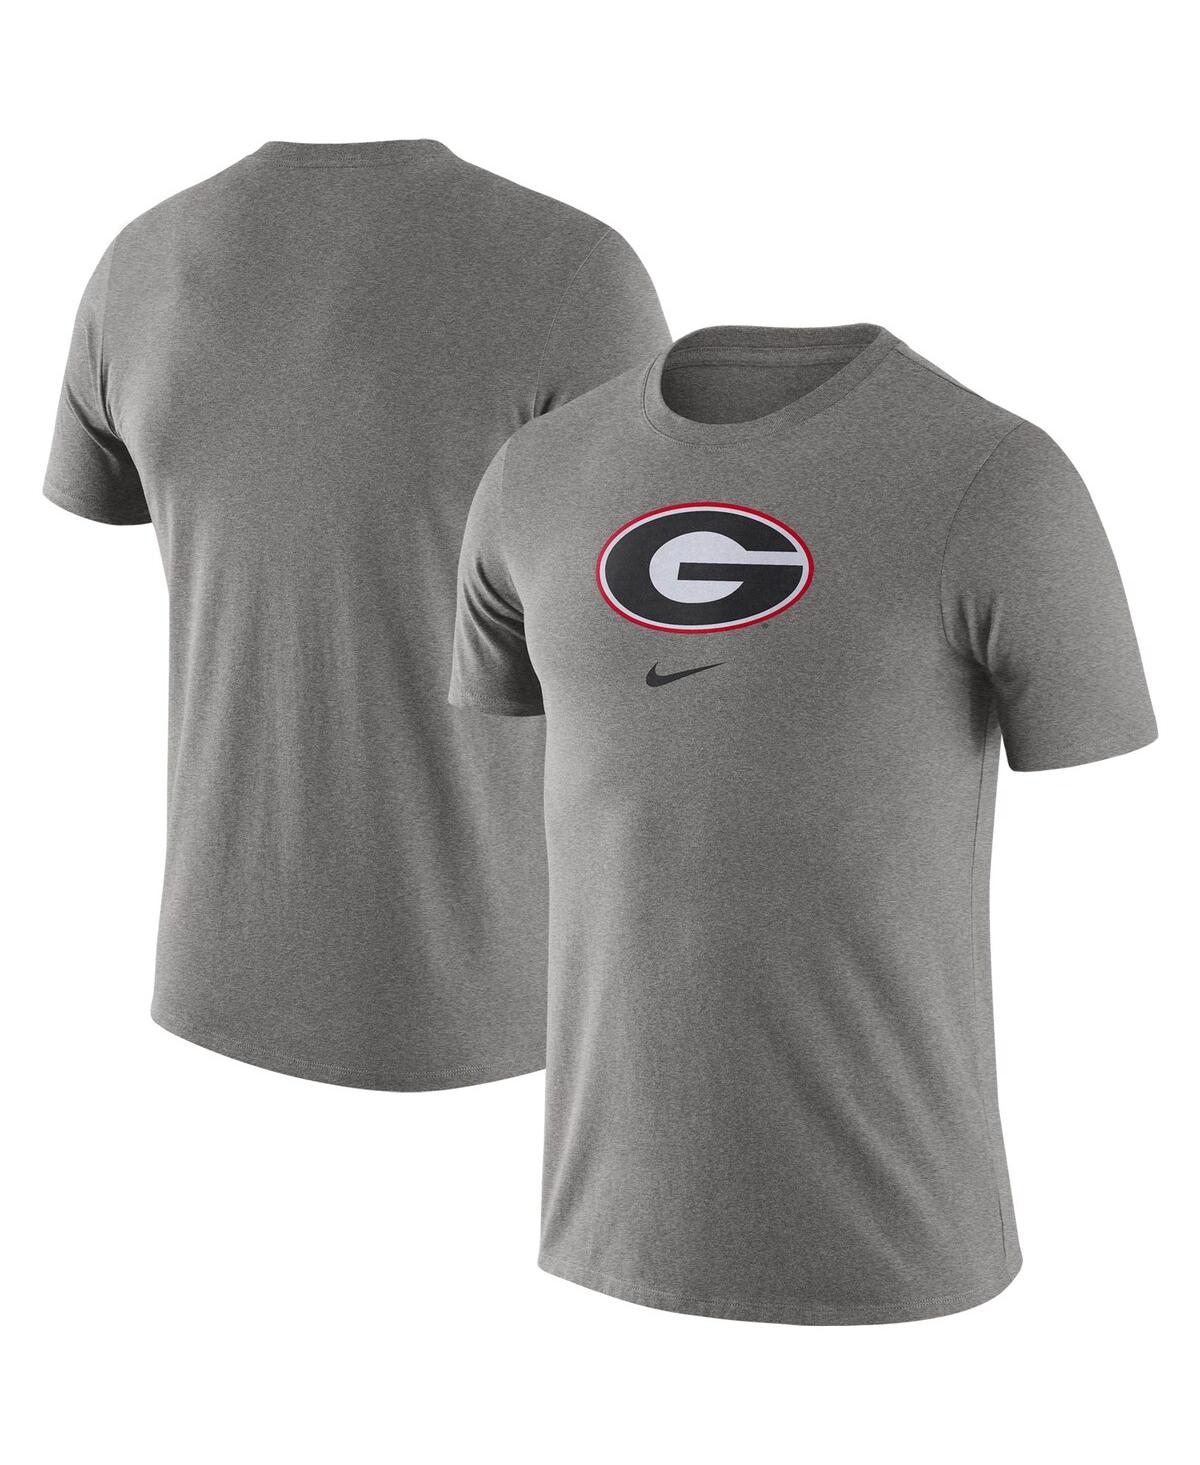 Men's Nike Heathered Gray Georgia Bulldogs Essential Logo T-shirt